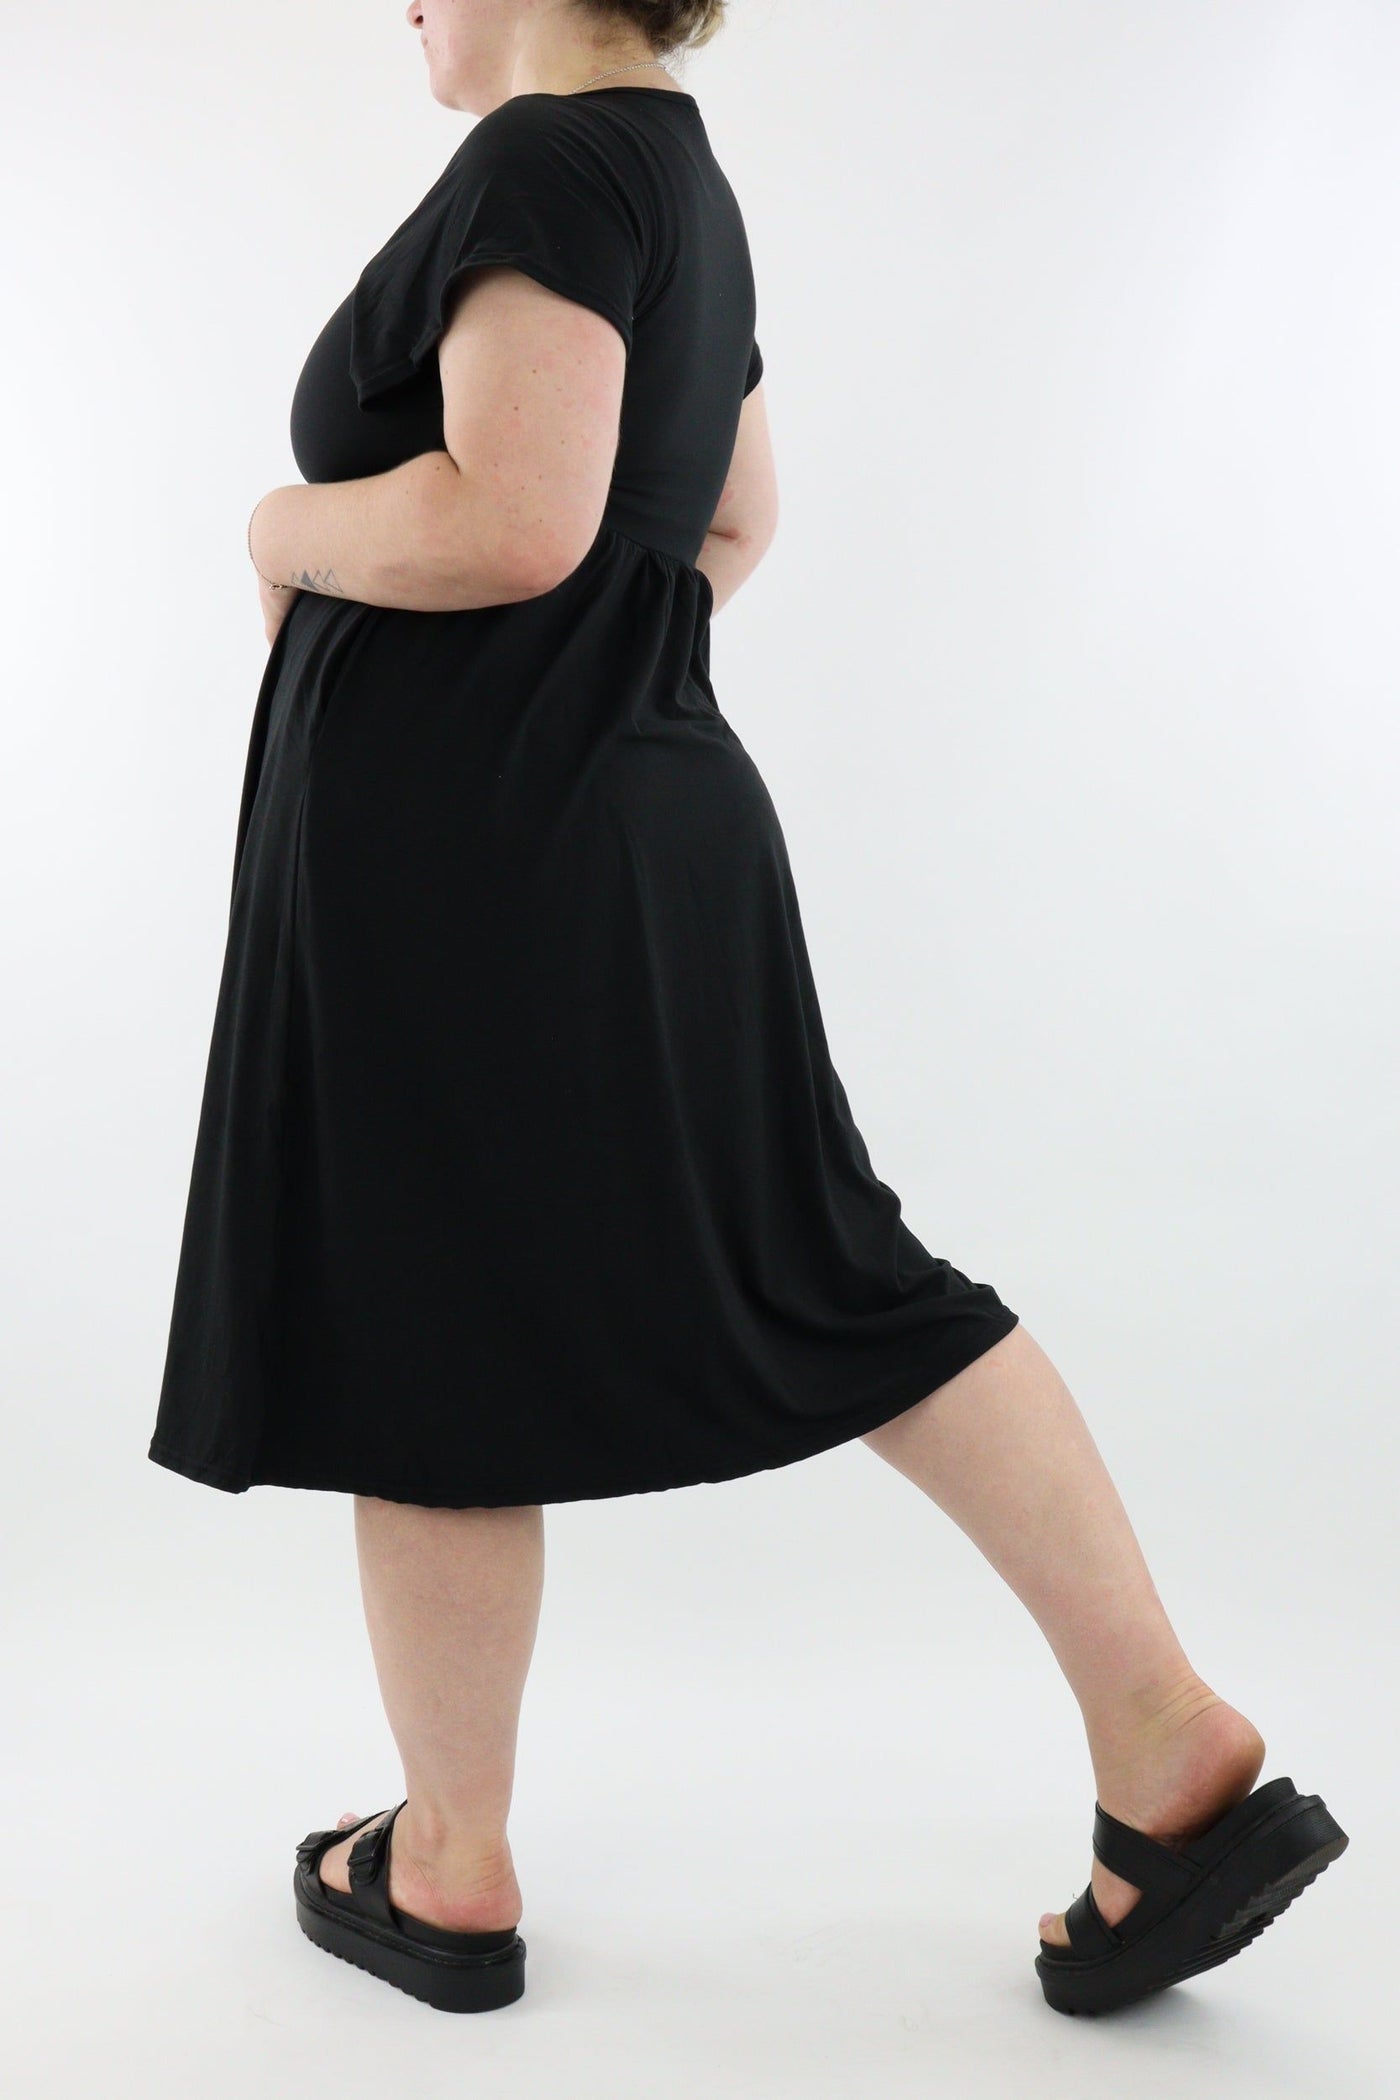 Black - A-Line Dress - Midi Length - Side Pockets - Pawlie